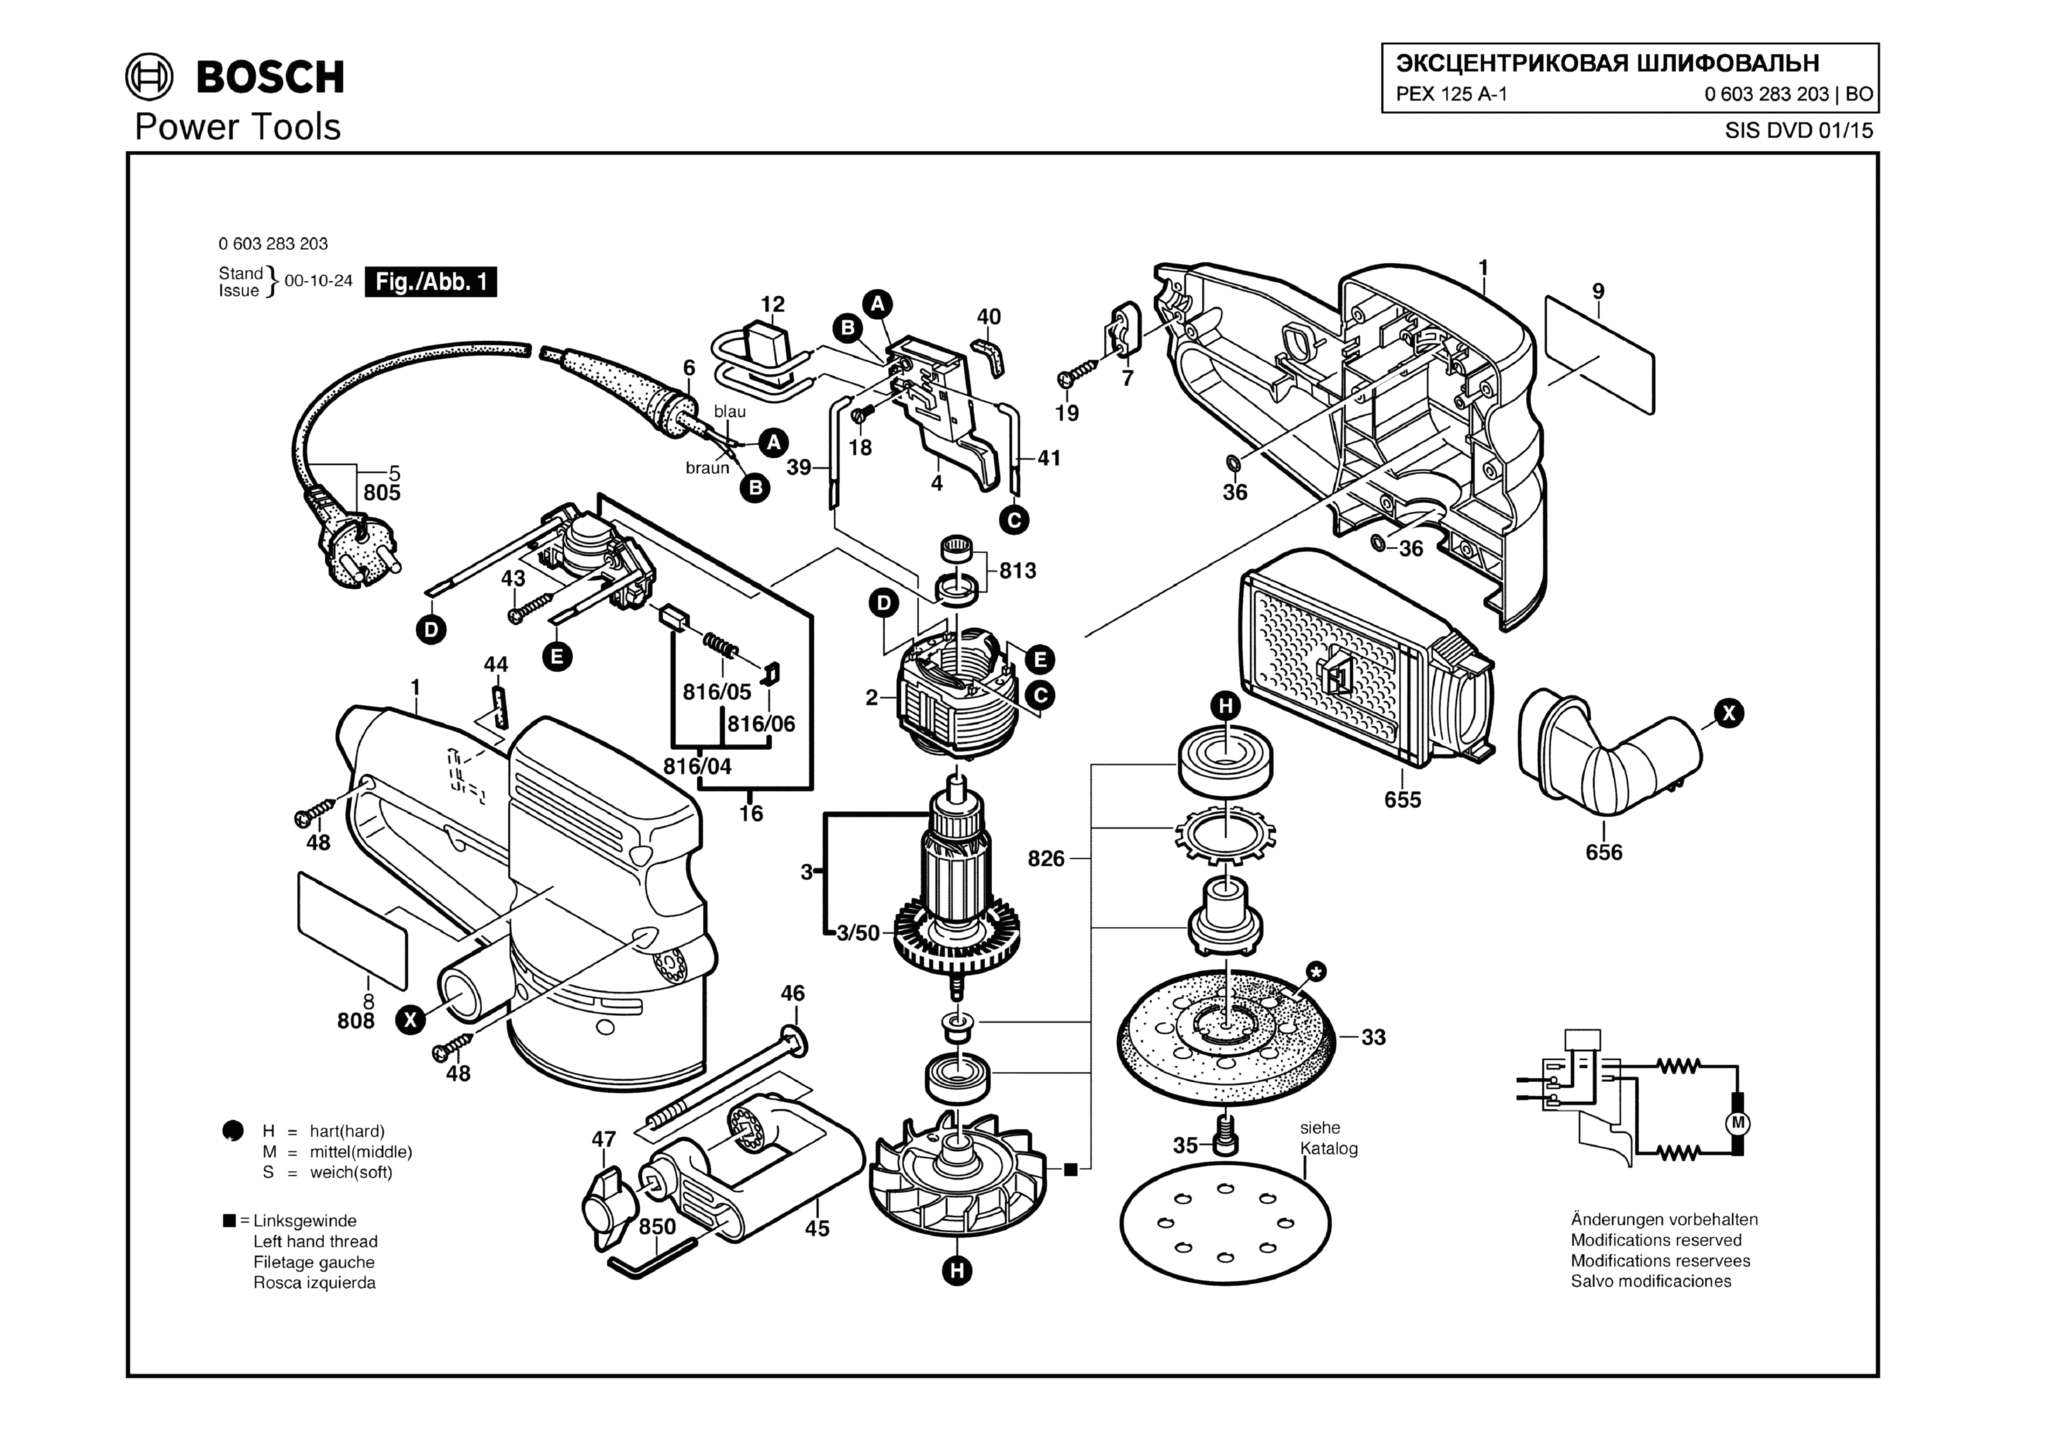 Запчасти, схема и деталировка Bosch PEX 125 A-1 (ТИП 0603283203)